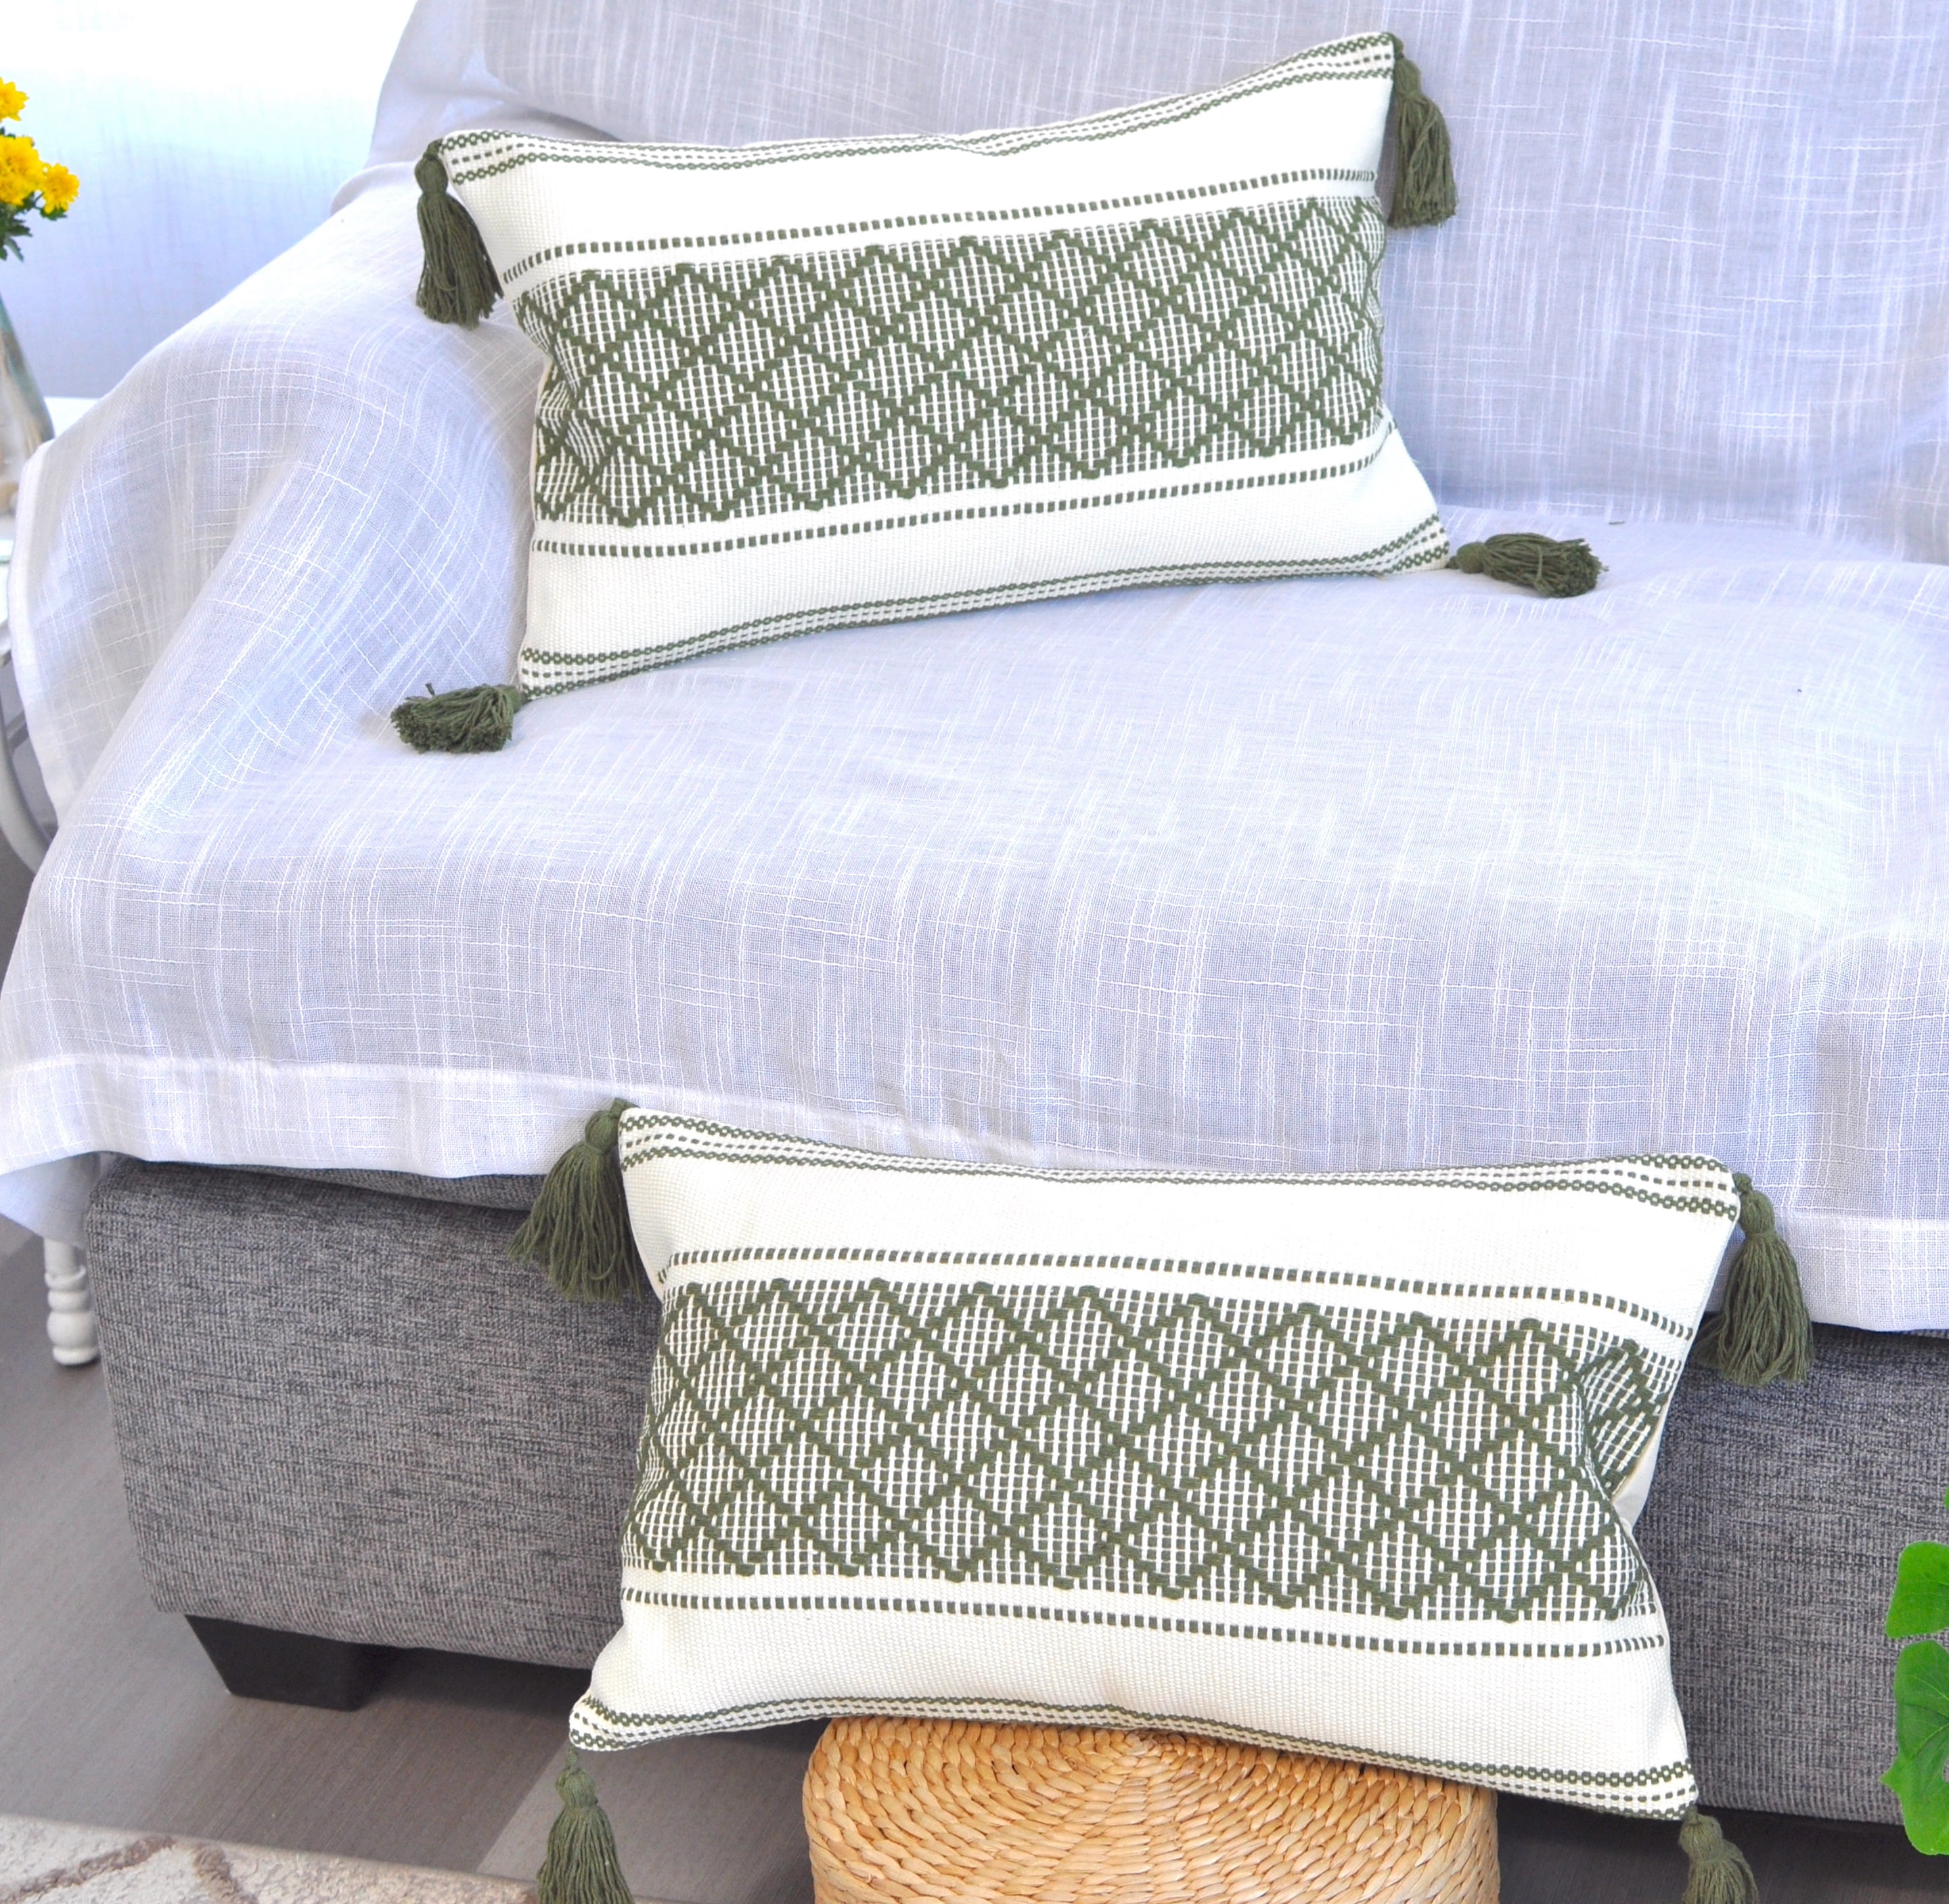 GIGIZAZA Decorative Small Lumbar Pillow Covers,Set of 2 Cushion Covers Velvet Cream Pillows,Sofa Throw 12 x 20 Pillow Covers